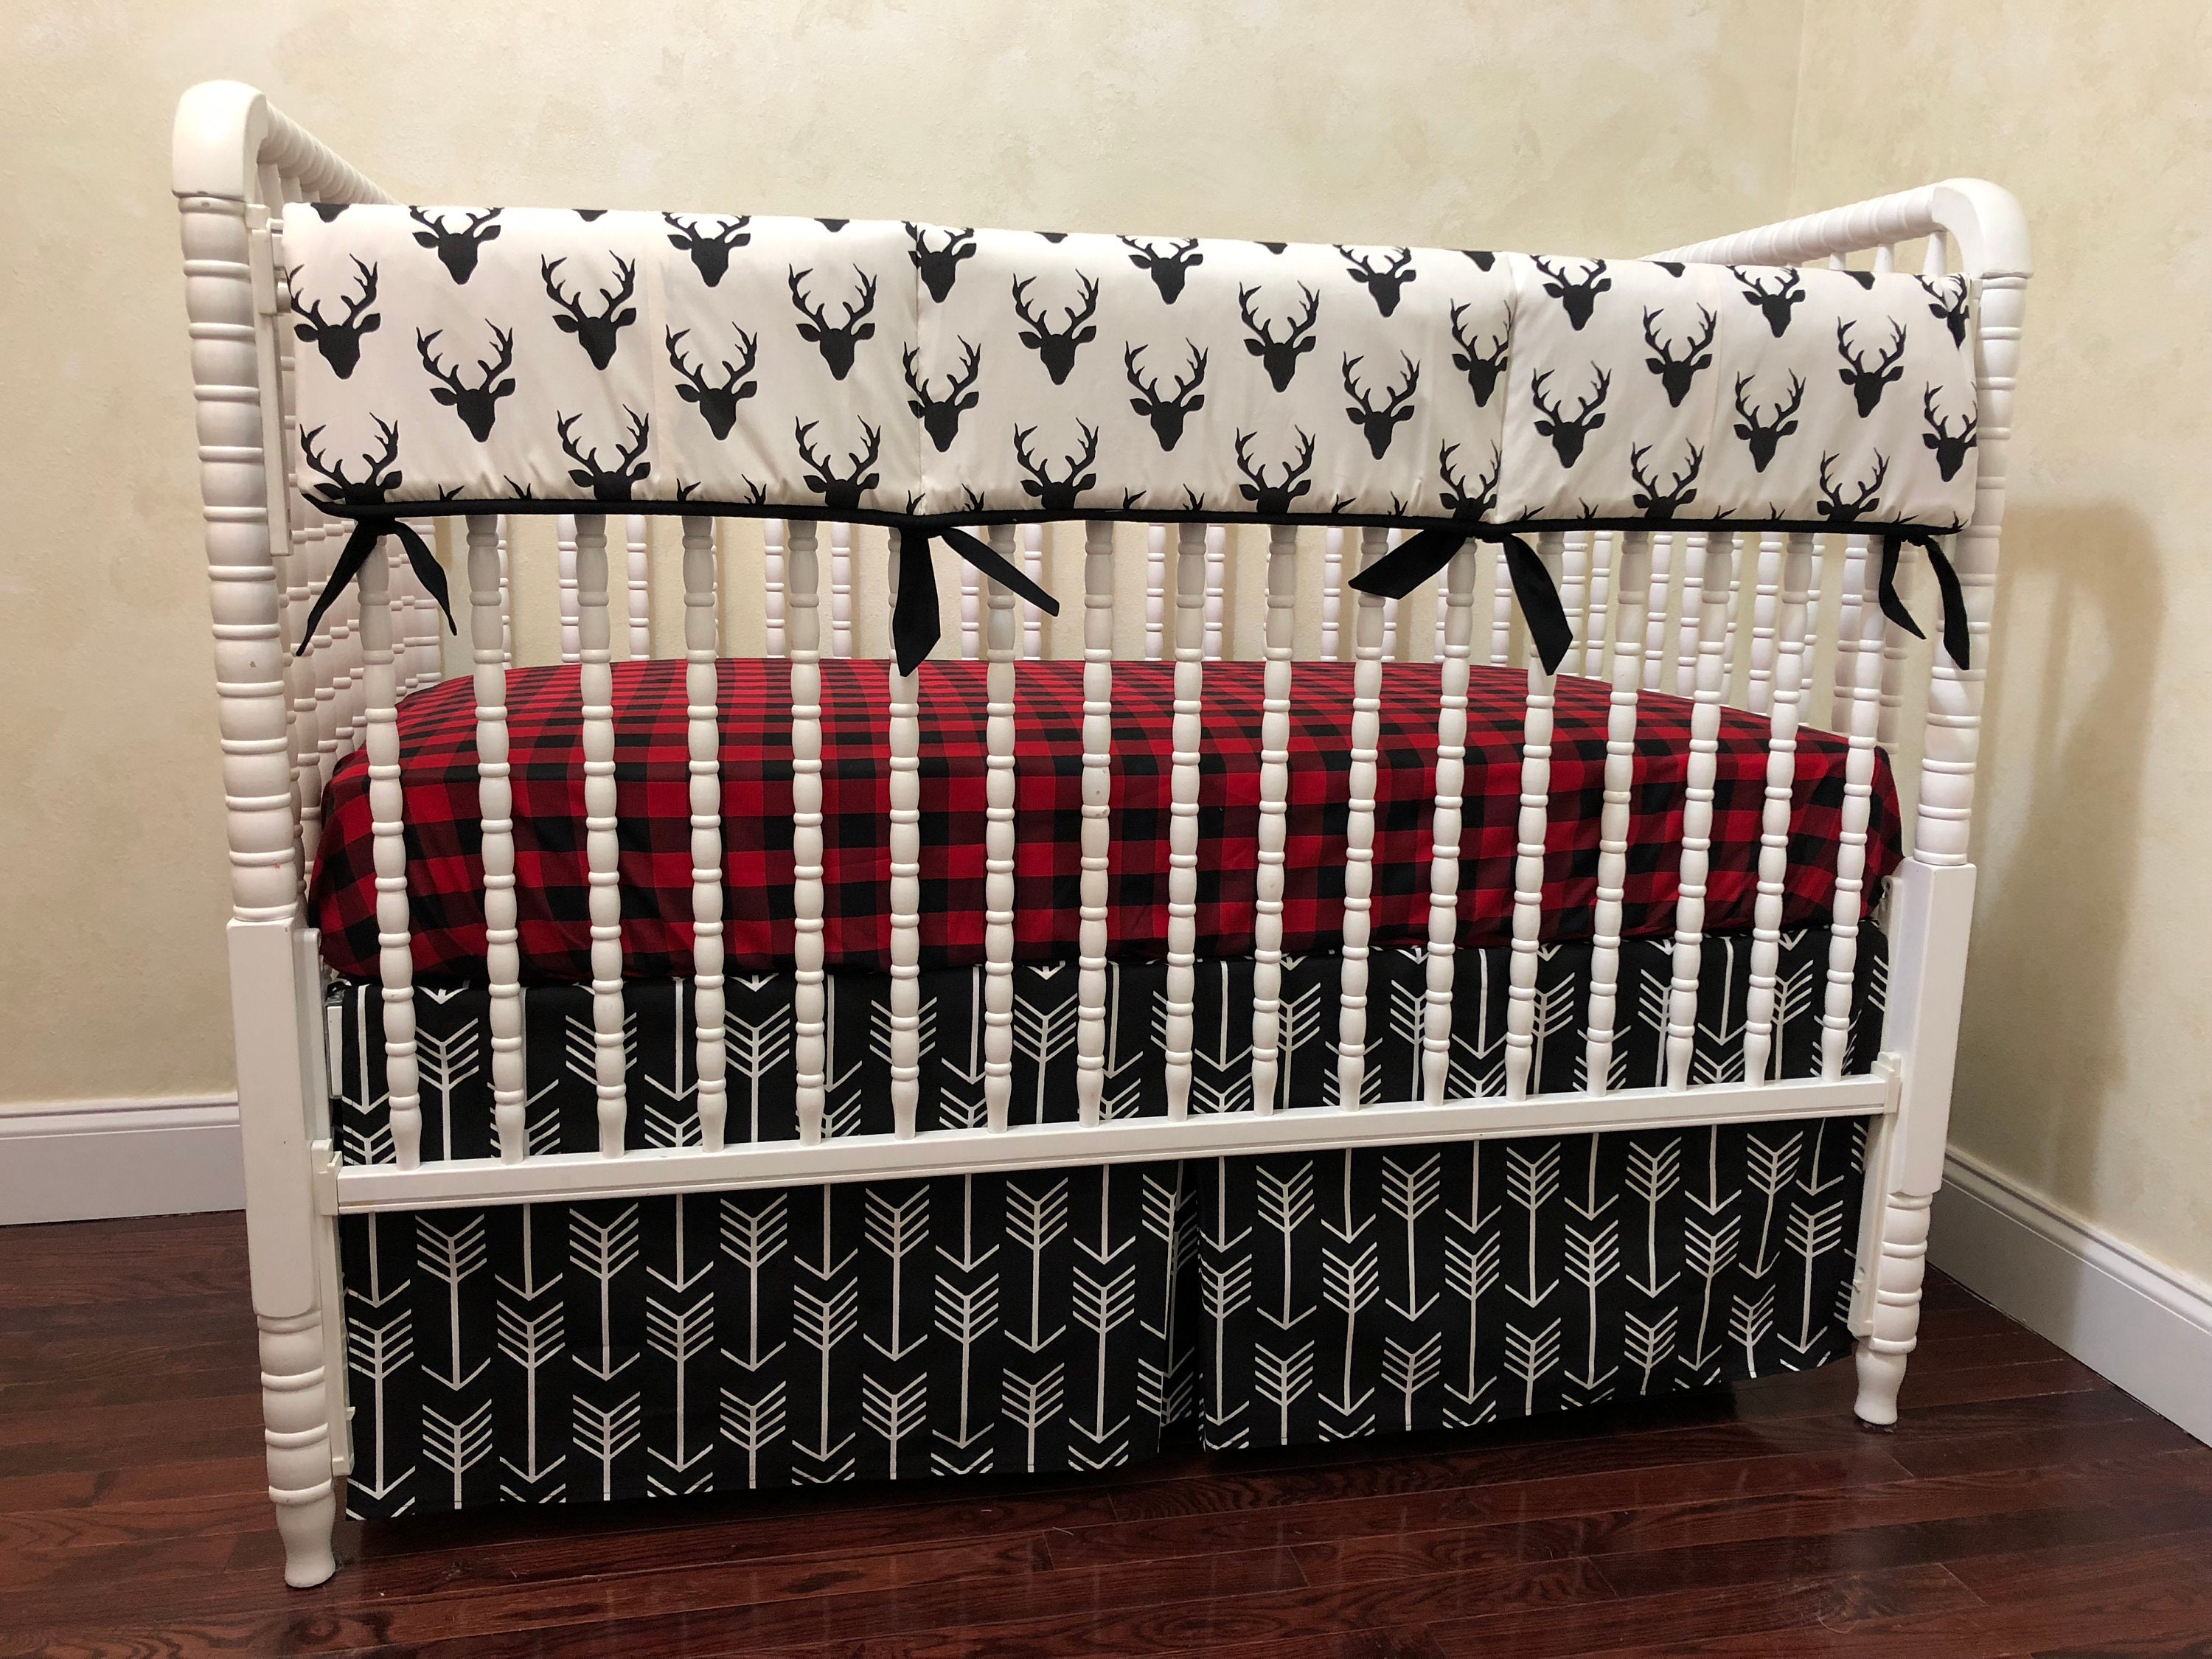 Toddler/Crib Size Blanket Patchwork Baby Blanket with Black Deer Red Plaid Black Arrows 